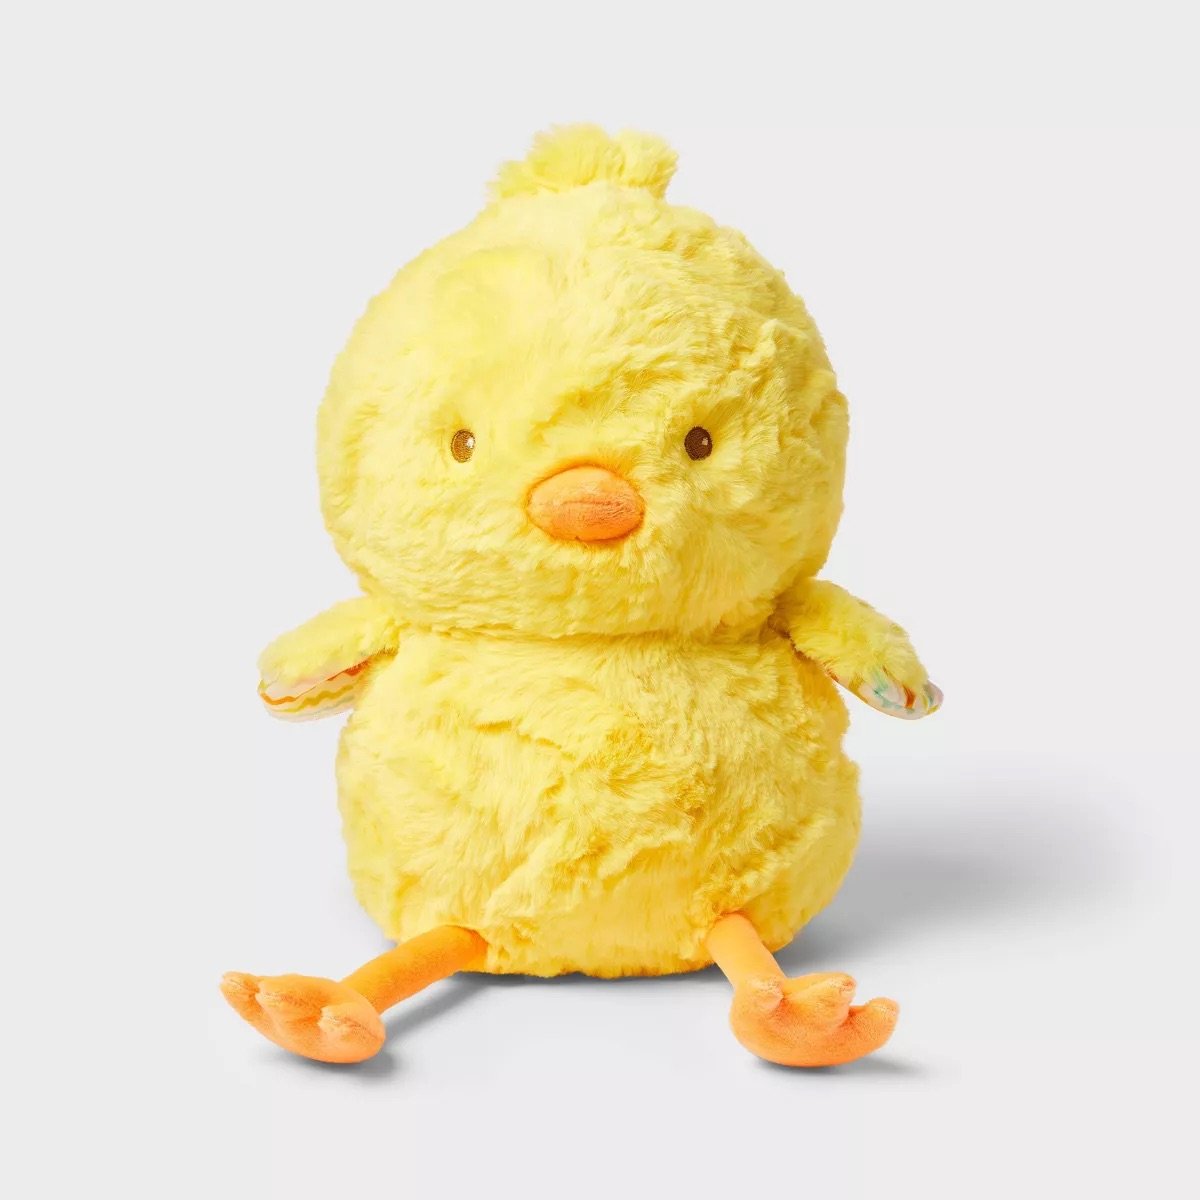 Chick Stuffed Animal Gigglescape.jpeg